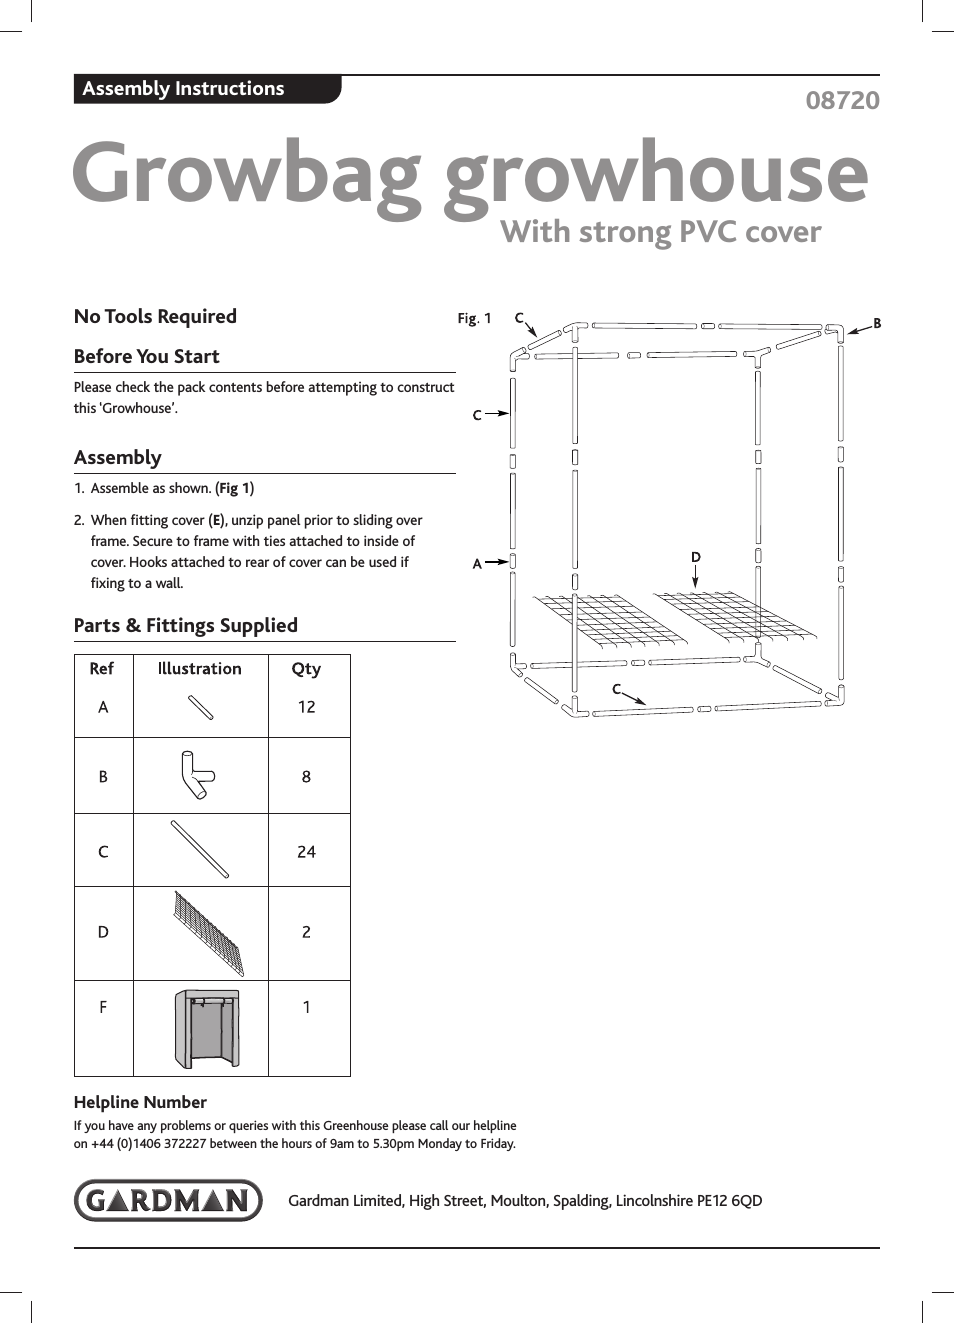 Growbag growhouse